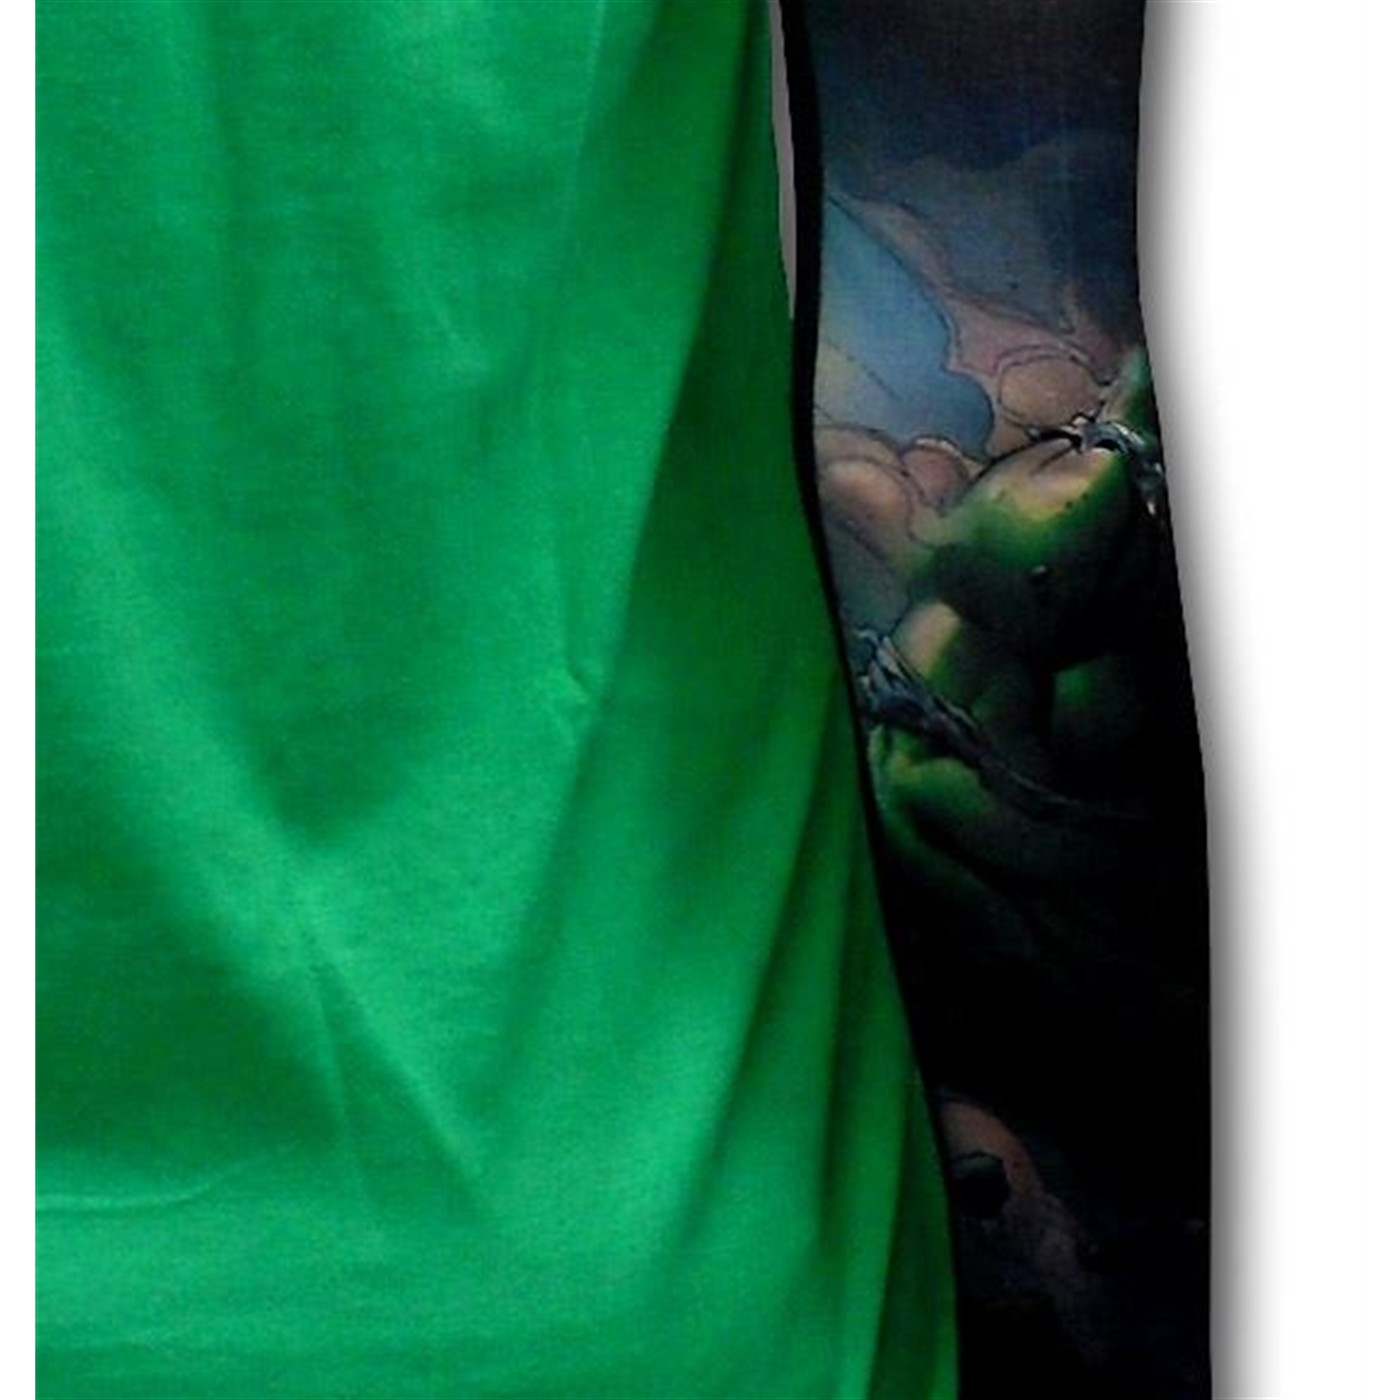 The Hulk Nylon Tattoo Sleeves- 2 Pack